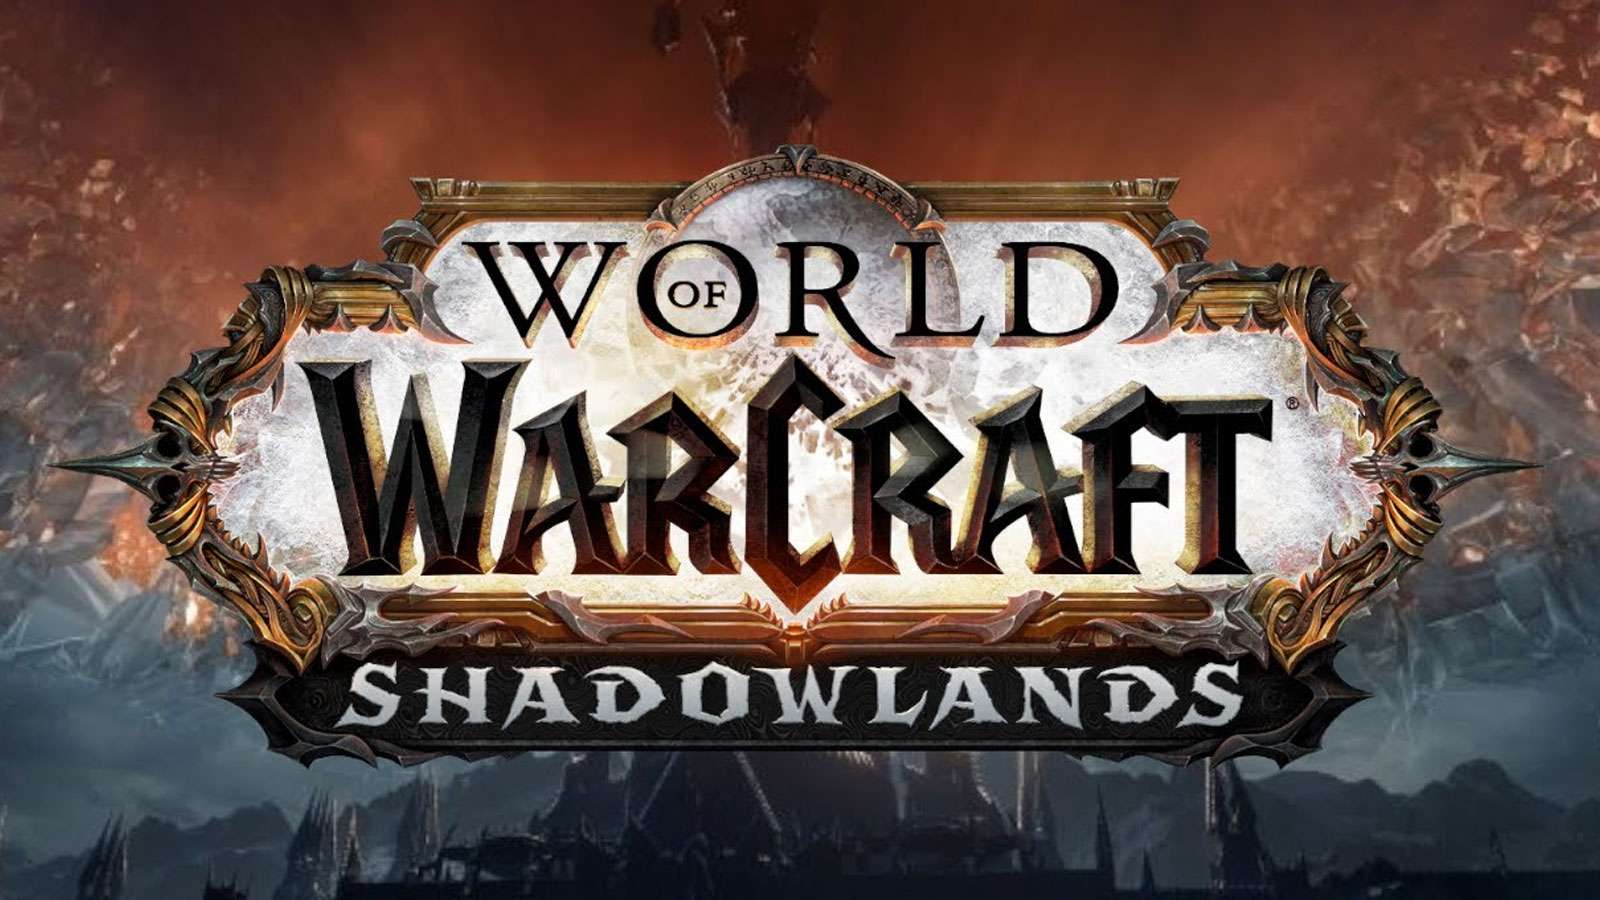 world of warcraft shadowlands